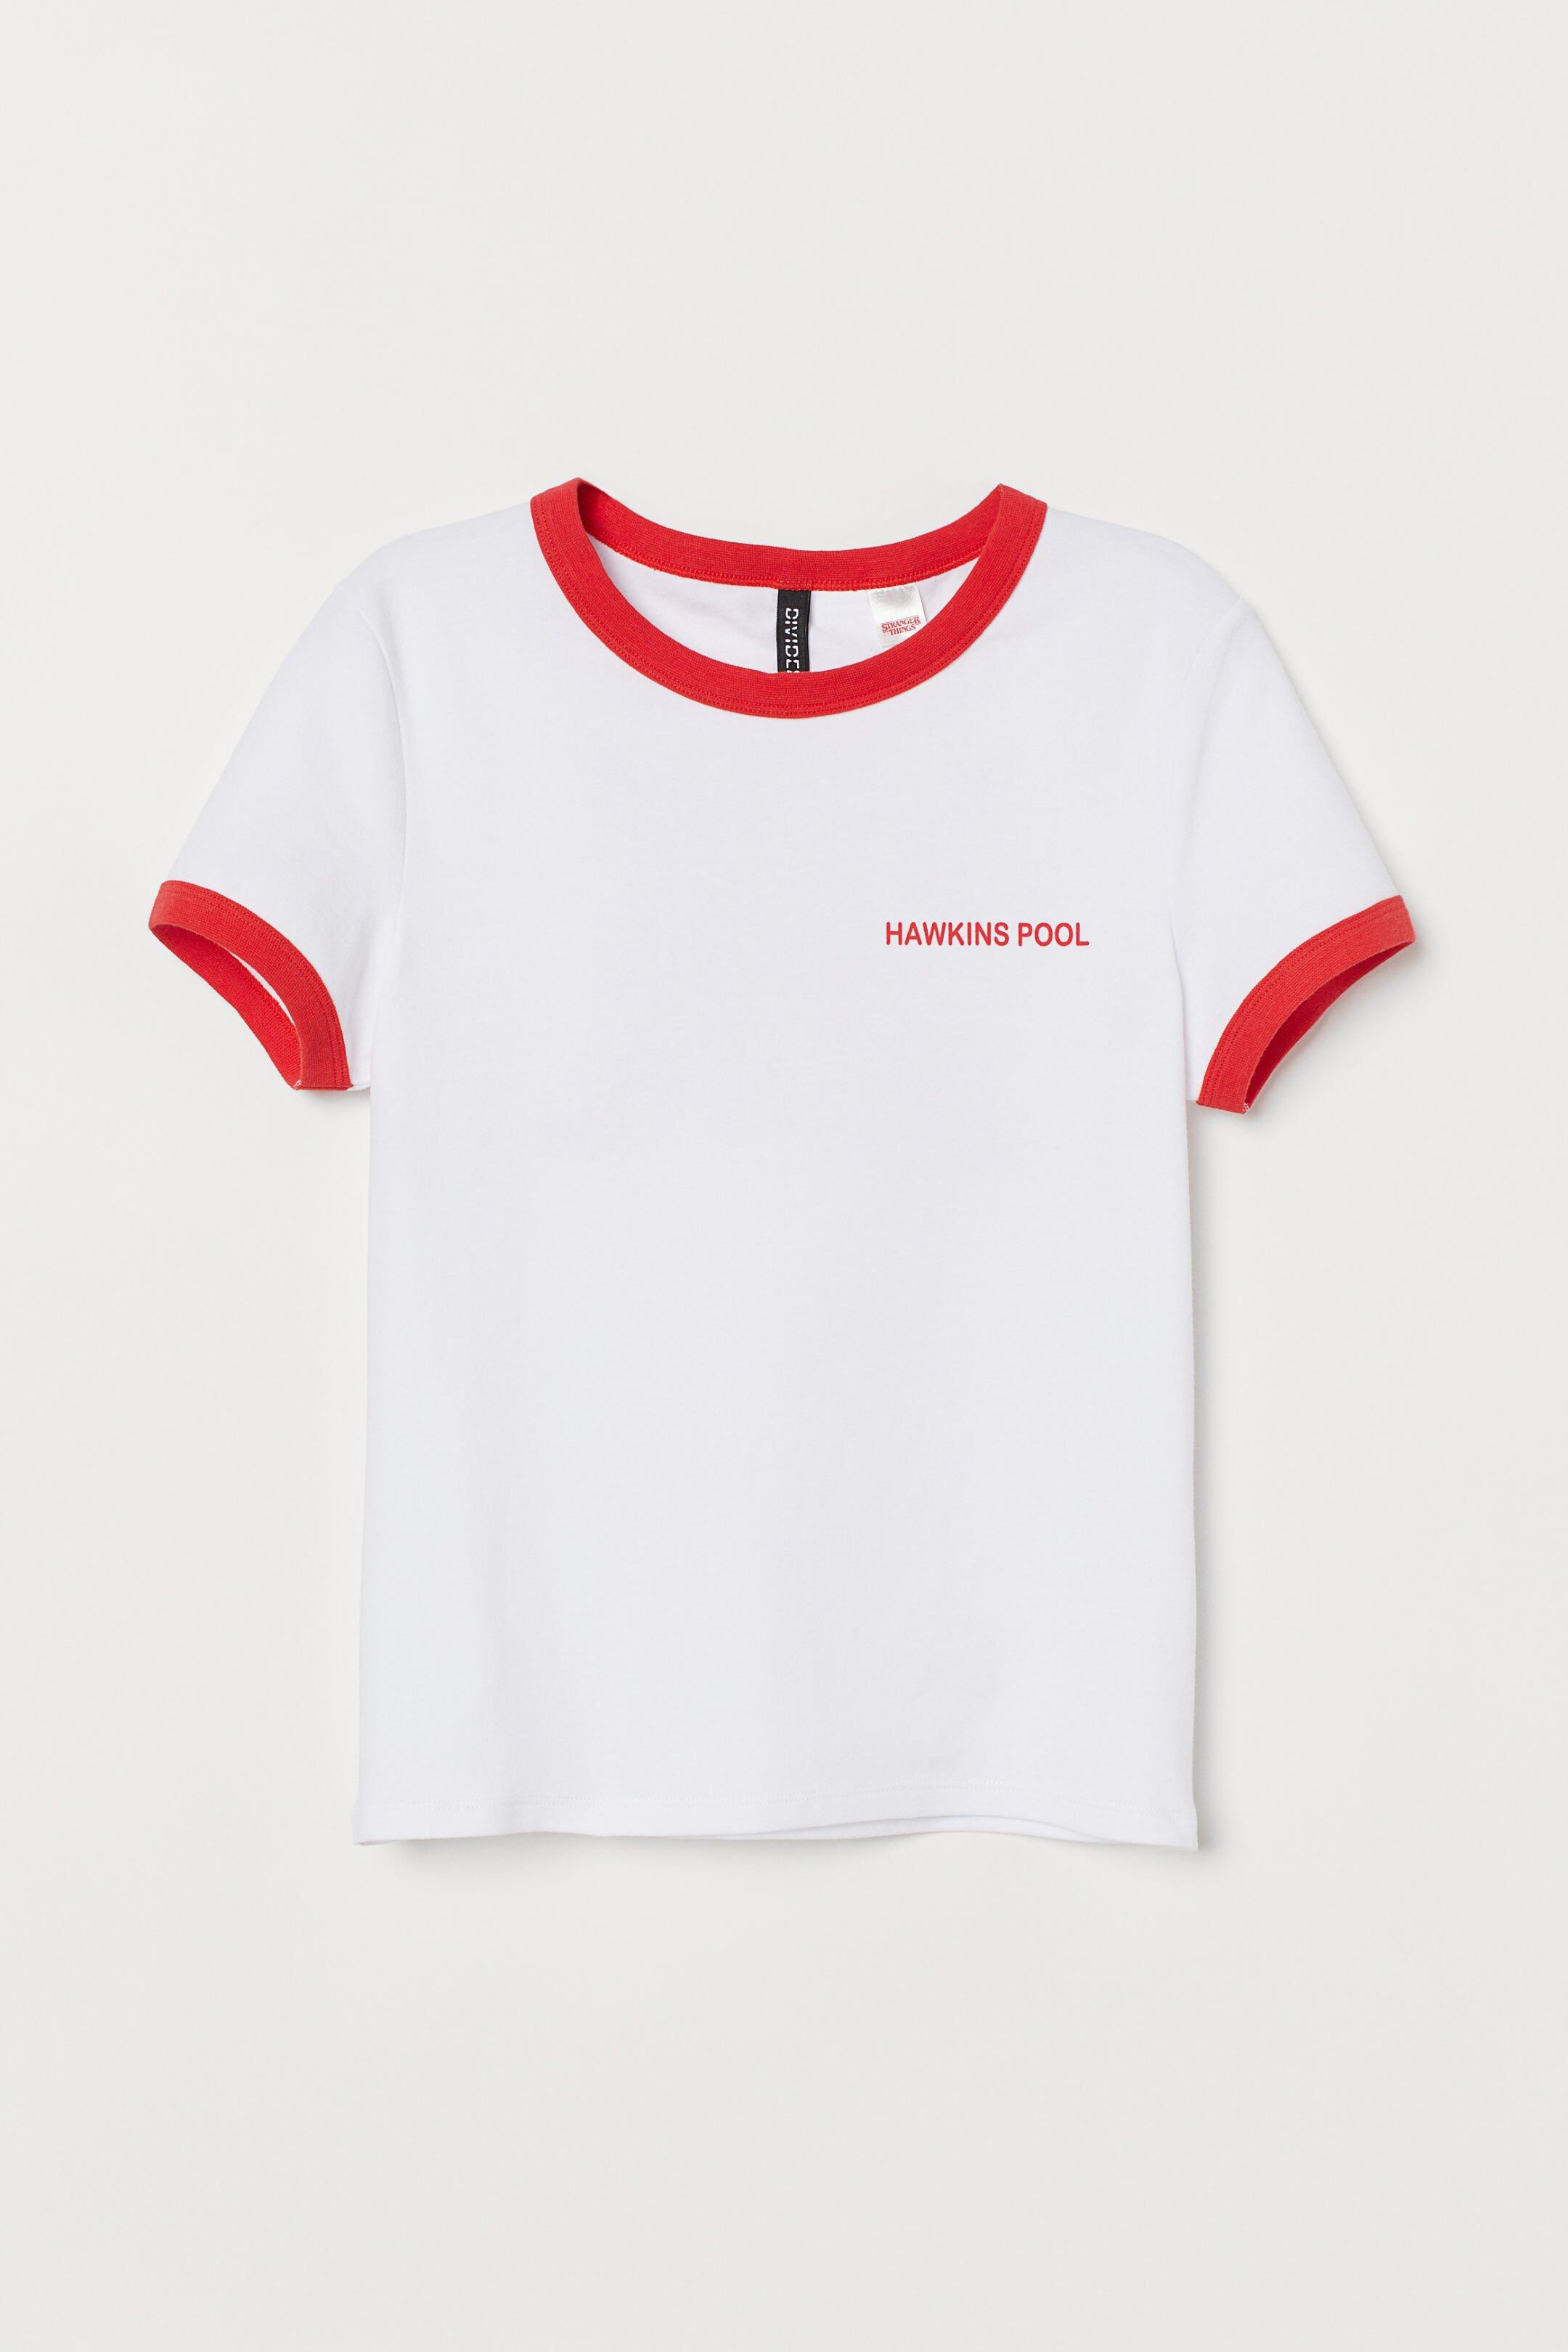 Stranger Things x H&M 紅邊白色T恤